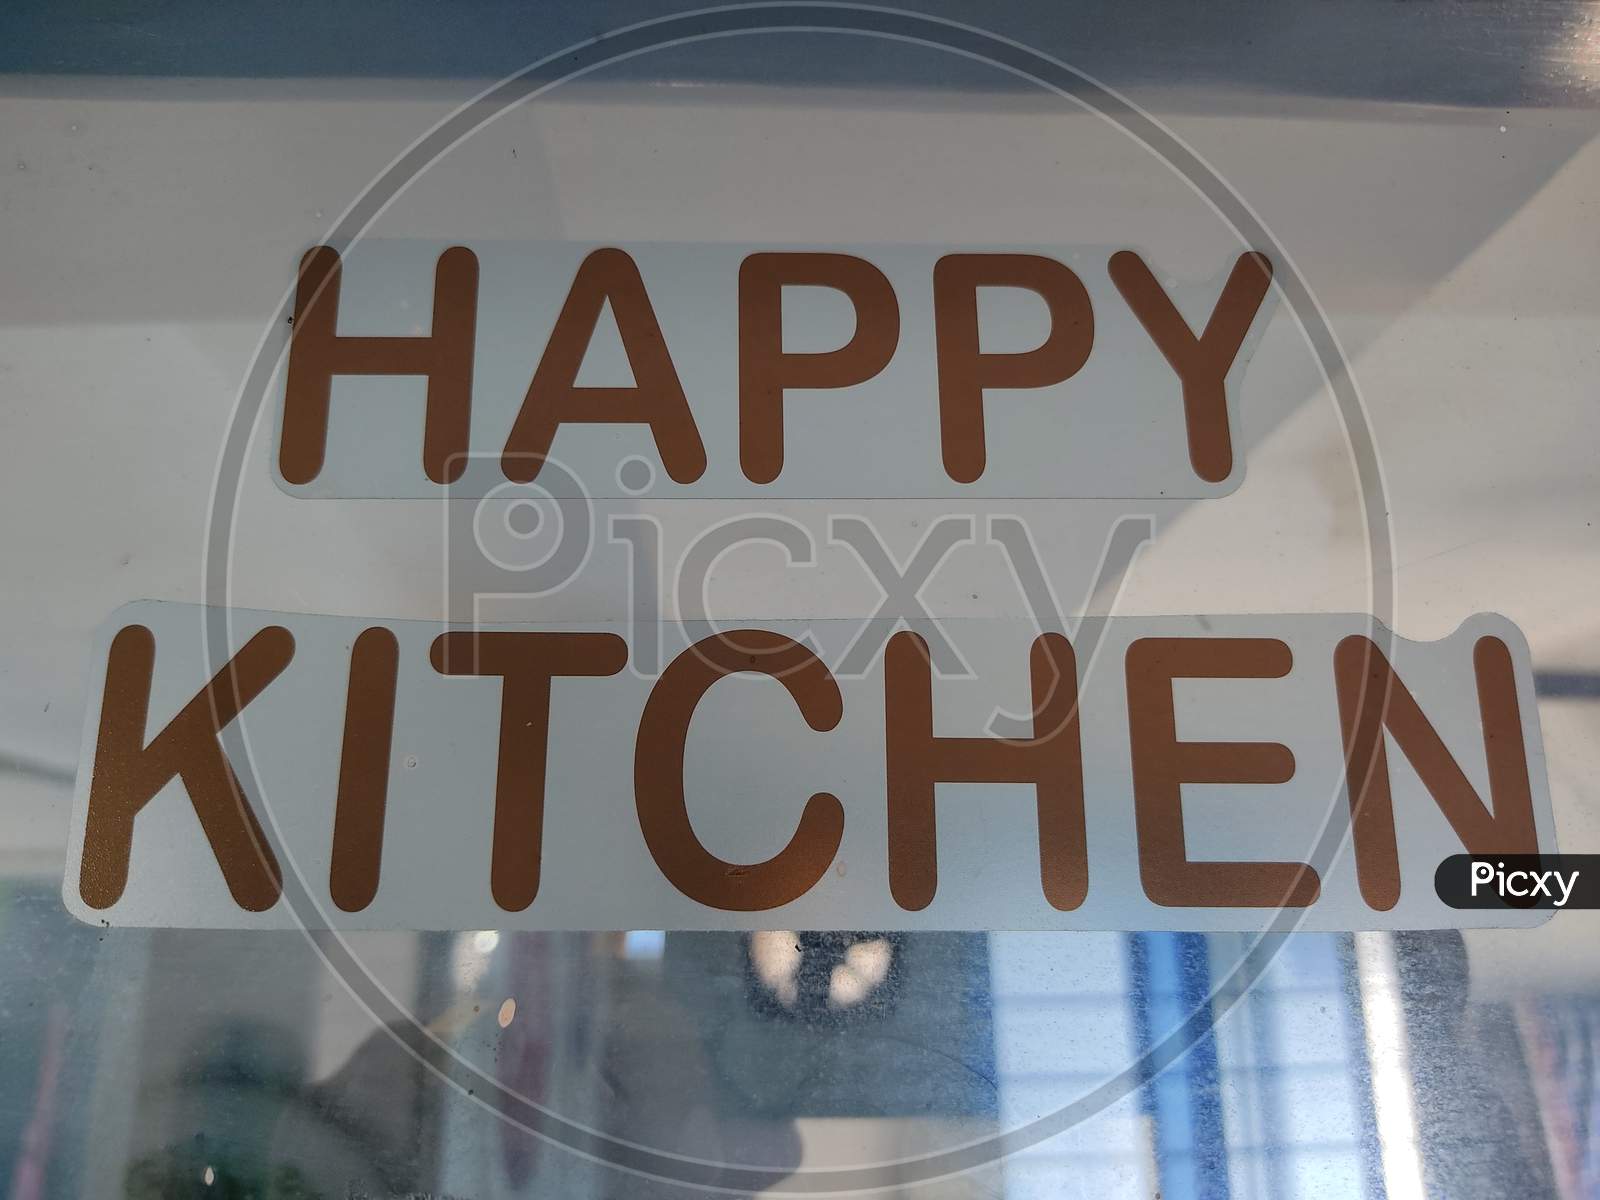 happy kitchen signage